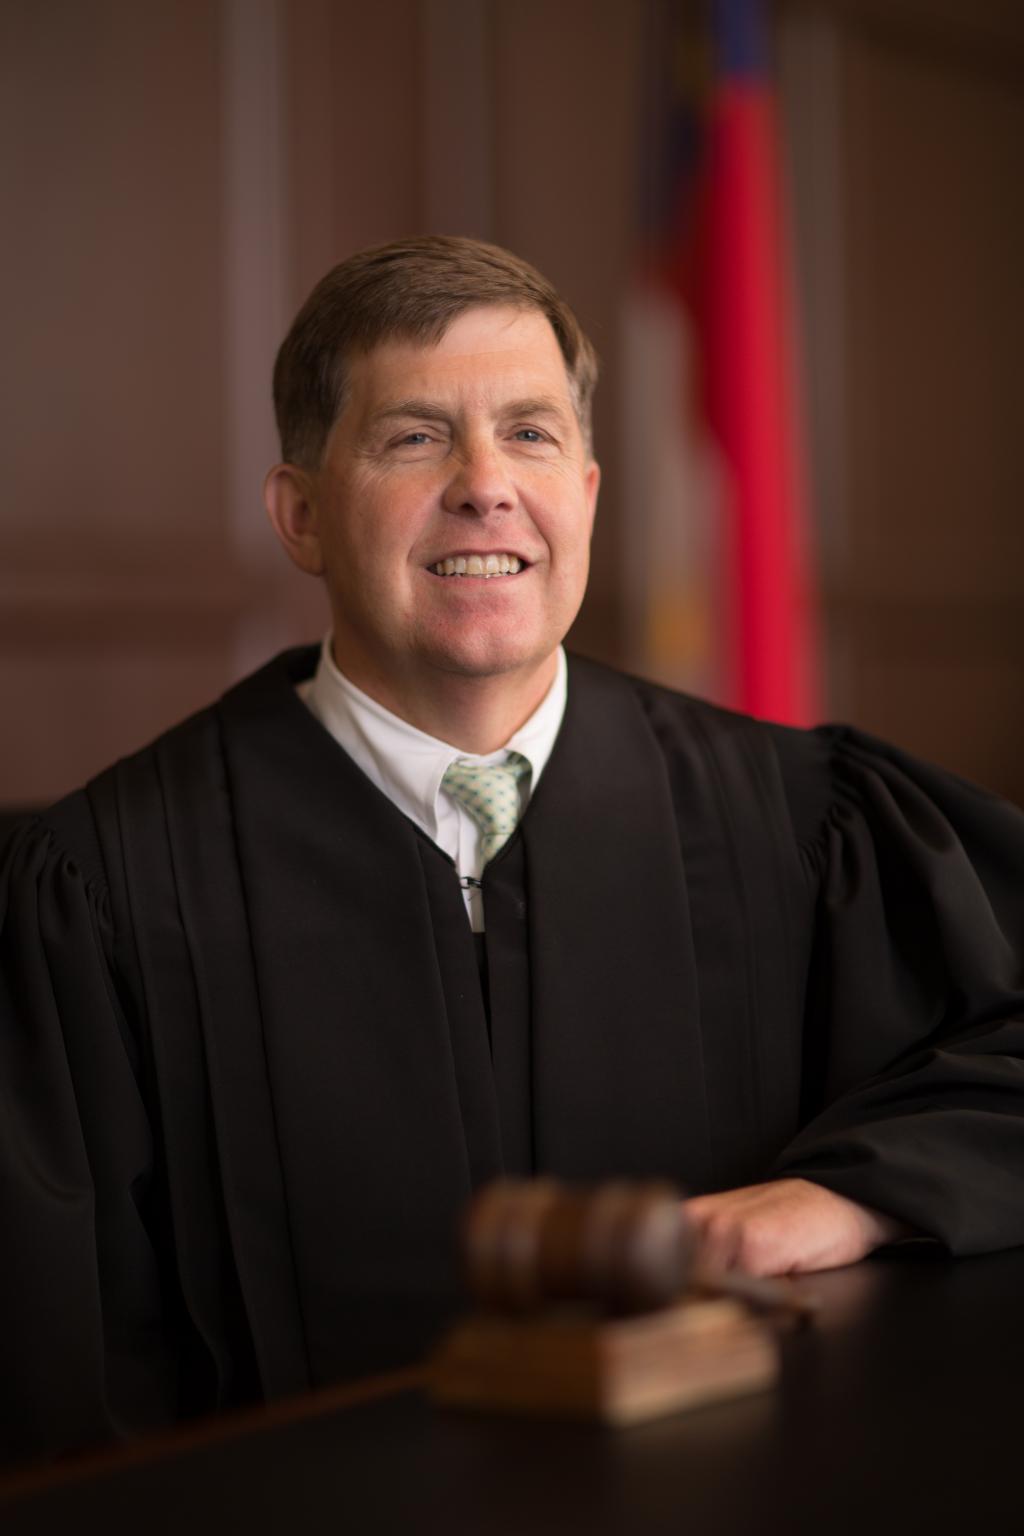 Chief Judge Chris Dillon